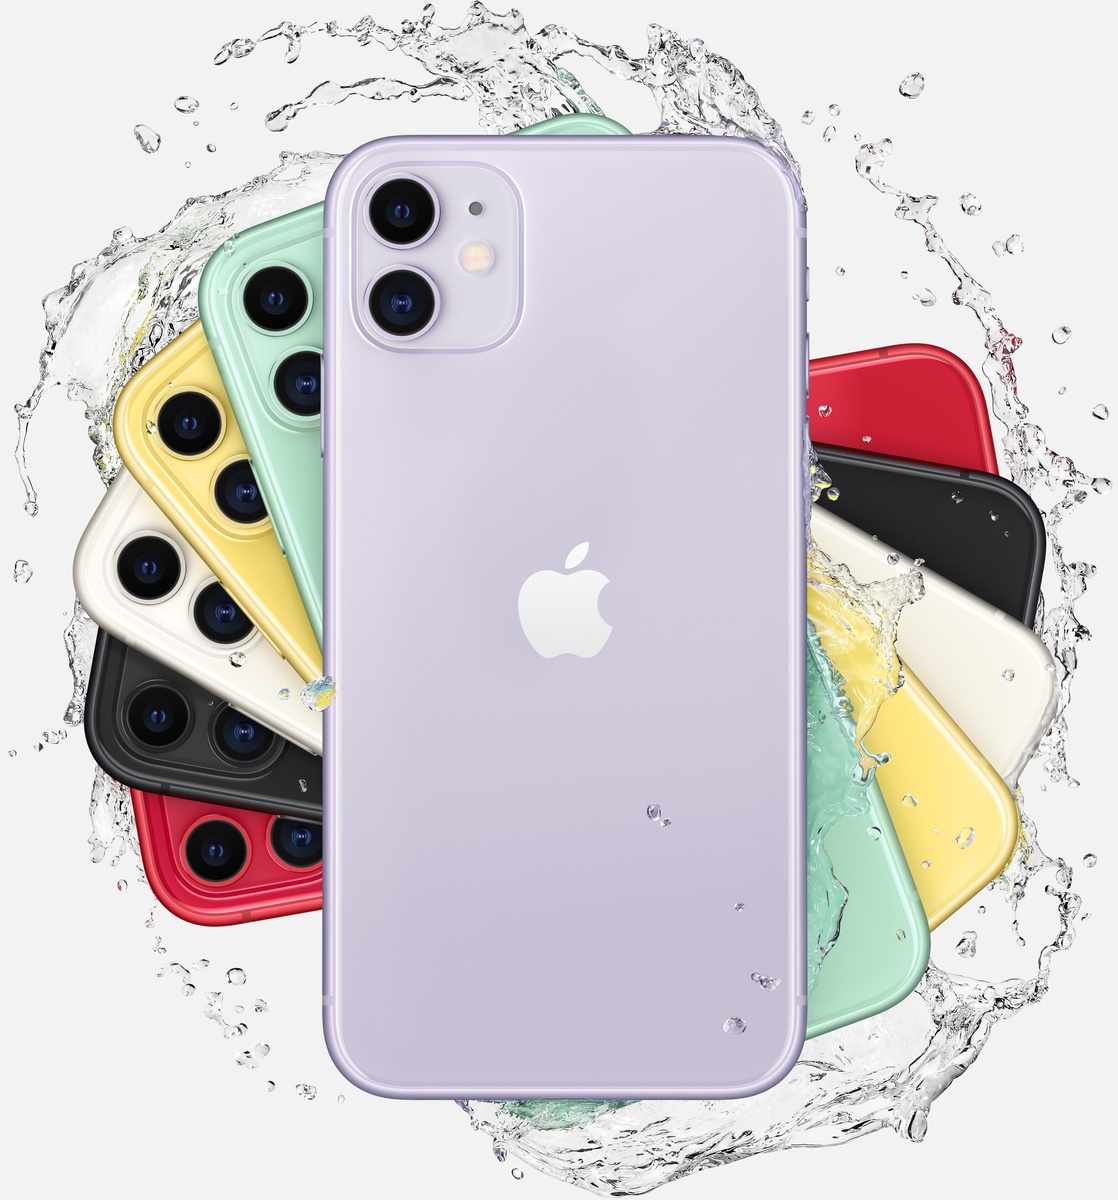 iPhone 11 256 Purple MWLQ2